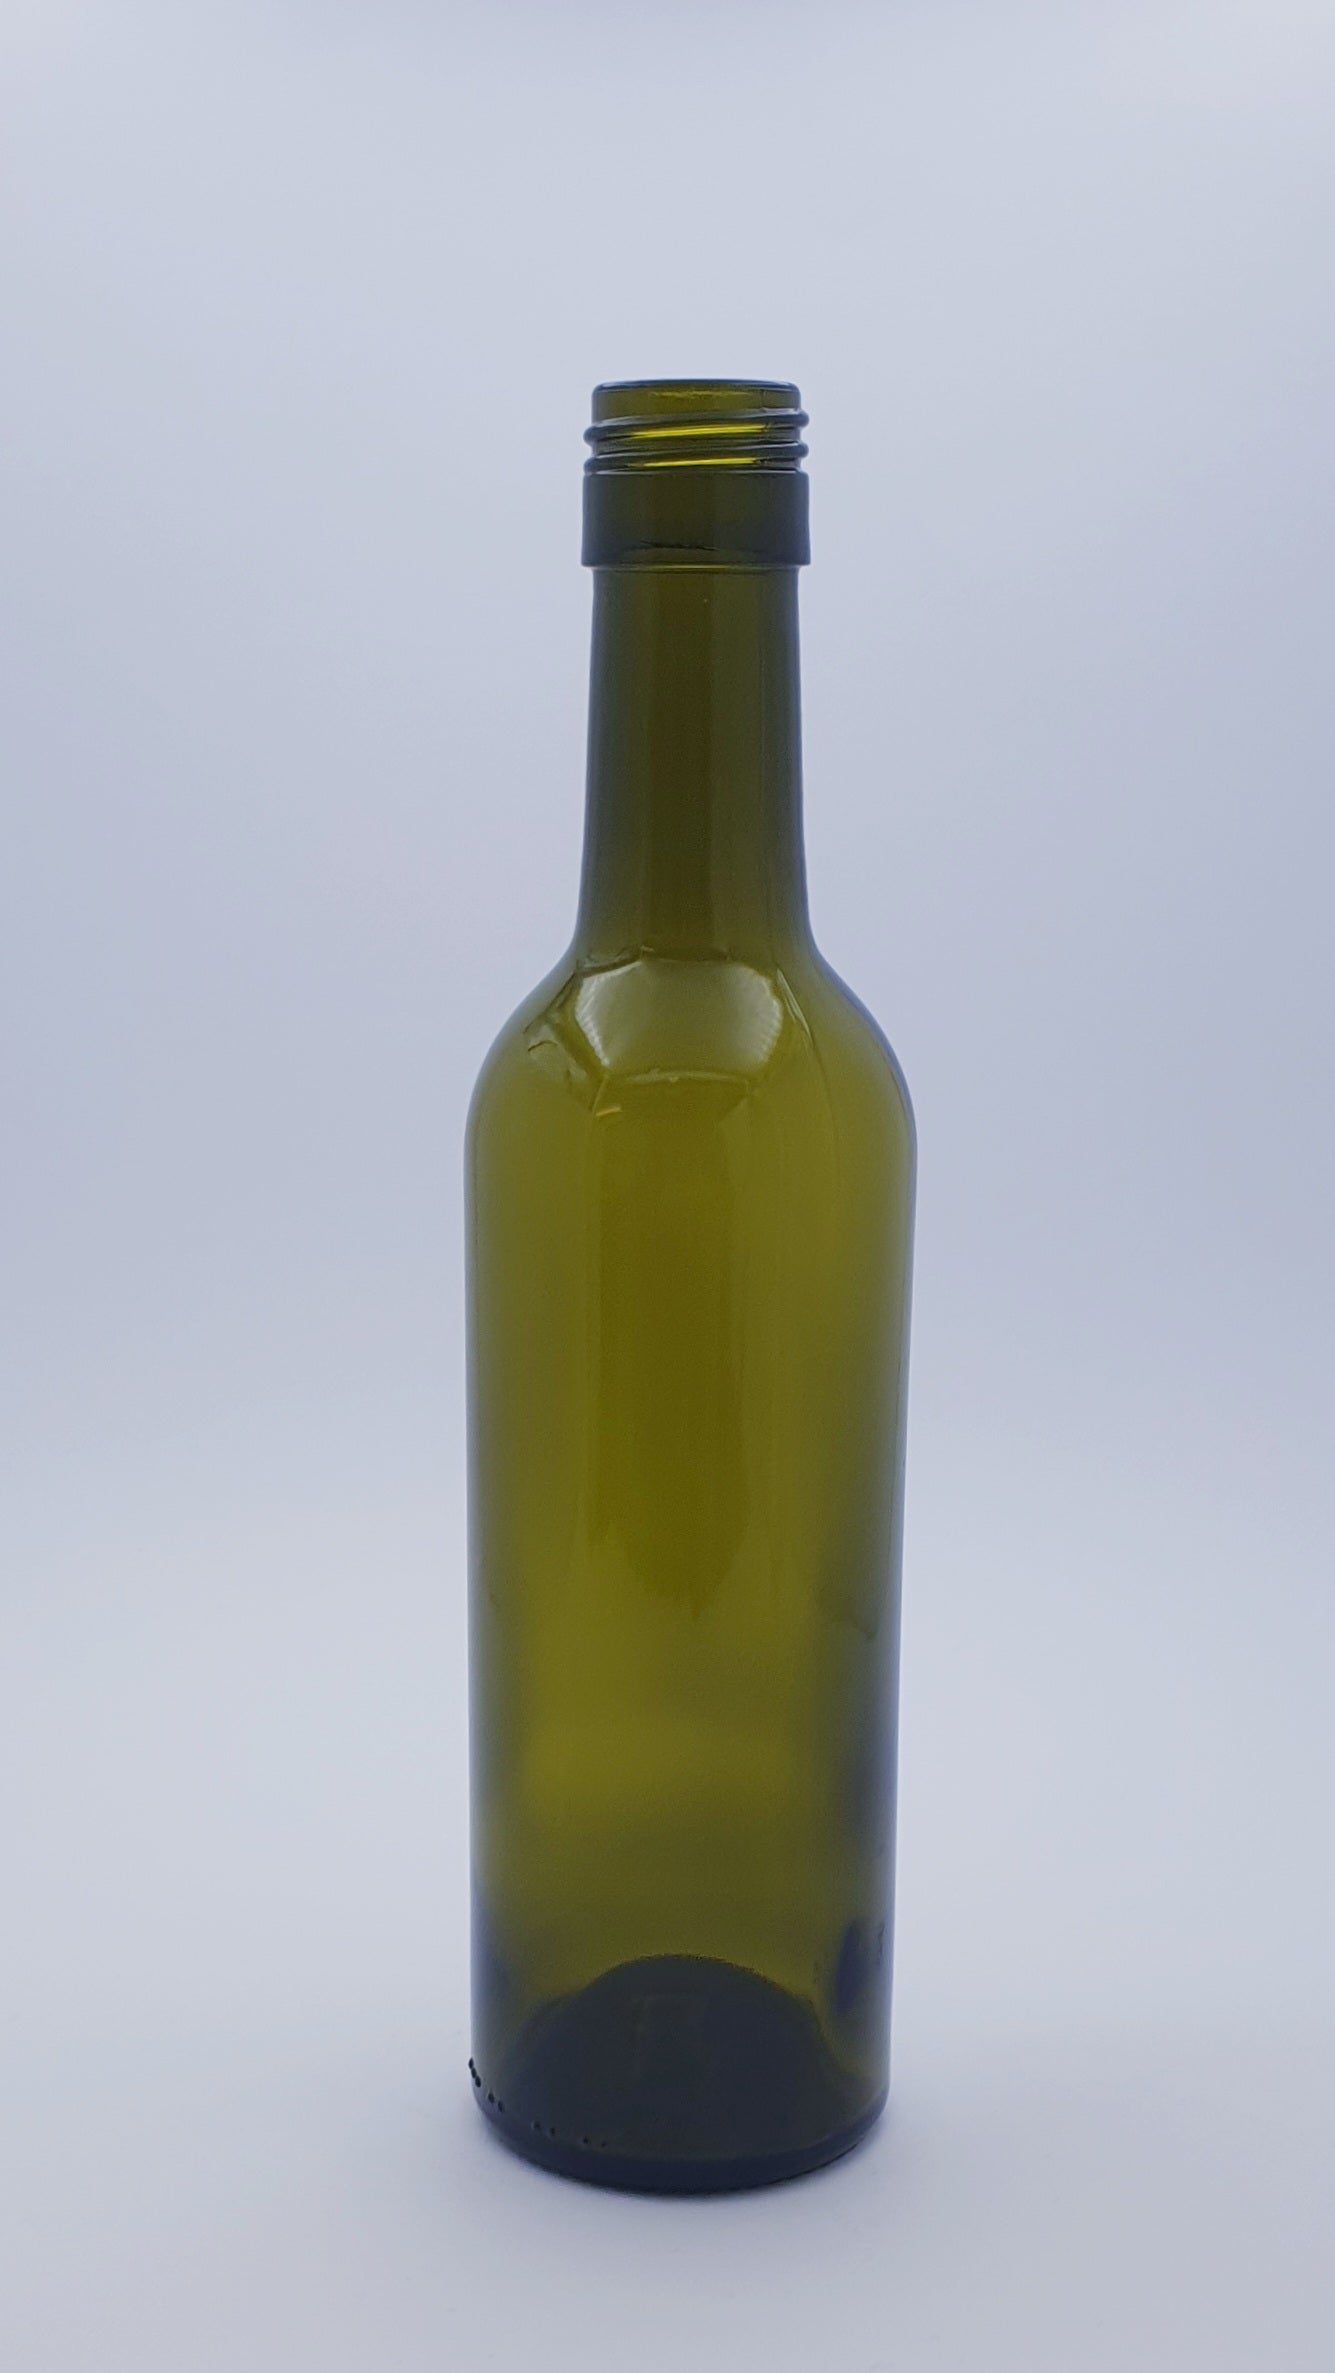 375ml Antique Green Claret Glass Bottle W/Cap - 40 Bottles and Caps Per Carton